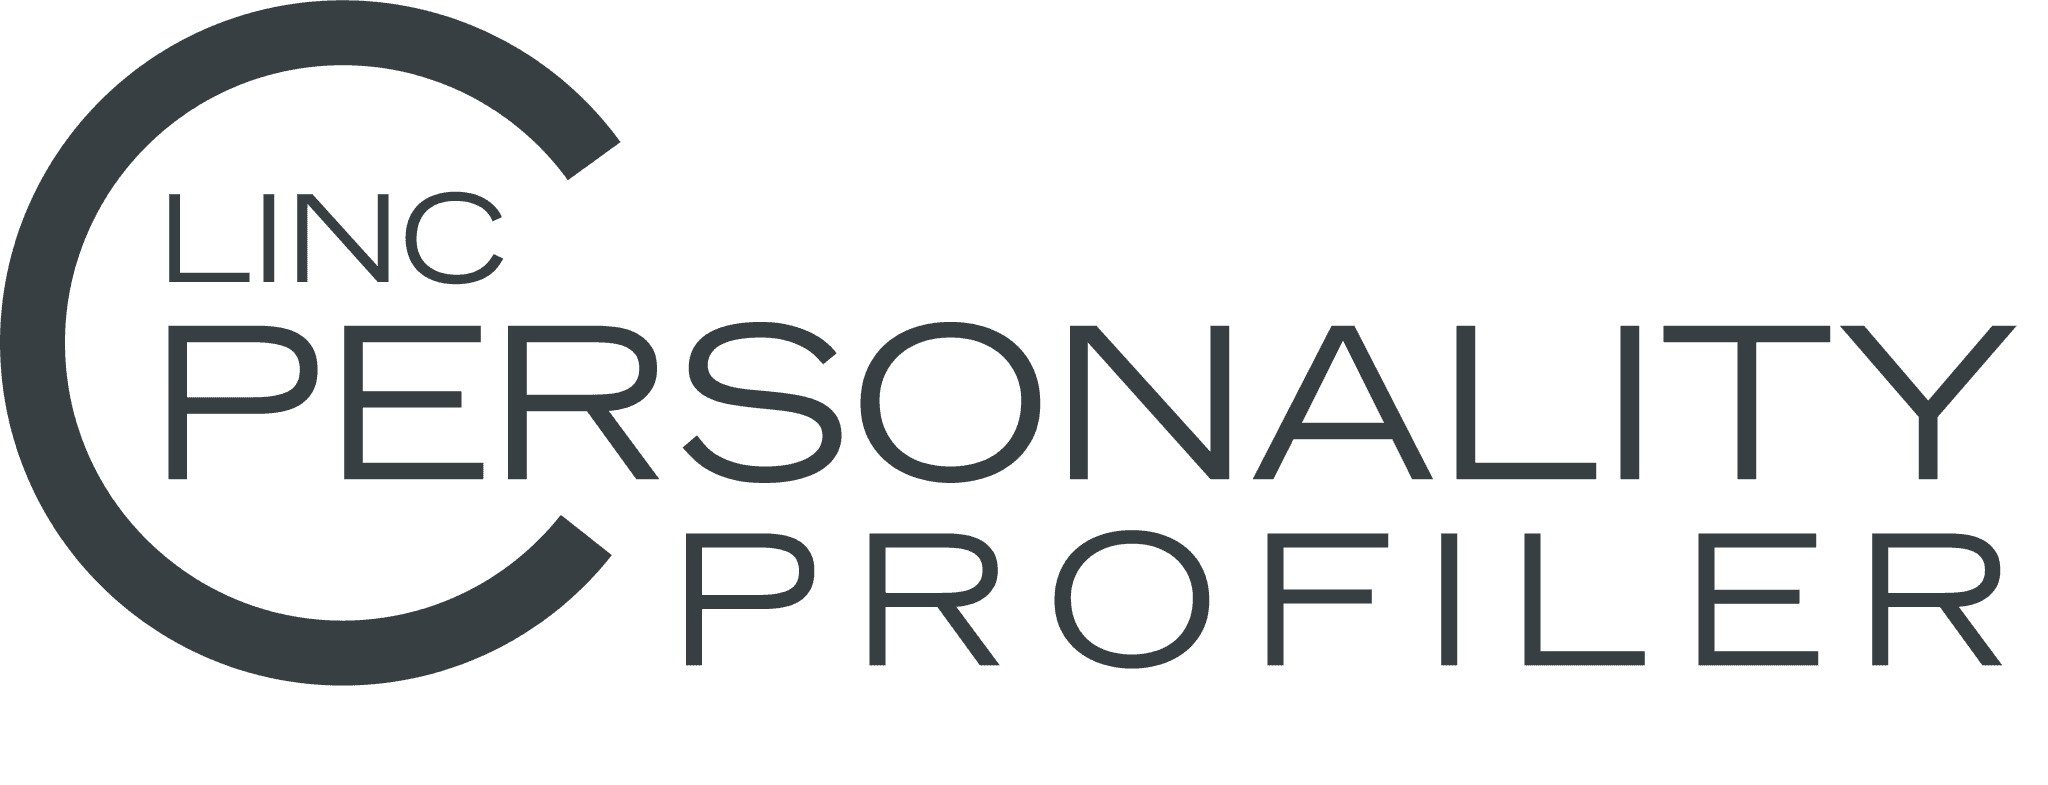 LINC Personality Profiler Logo